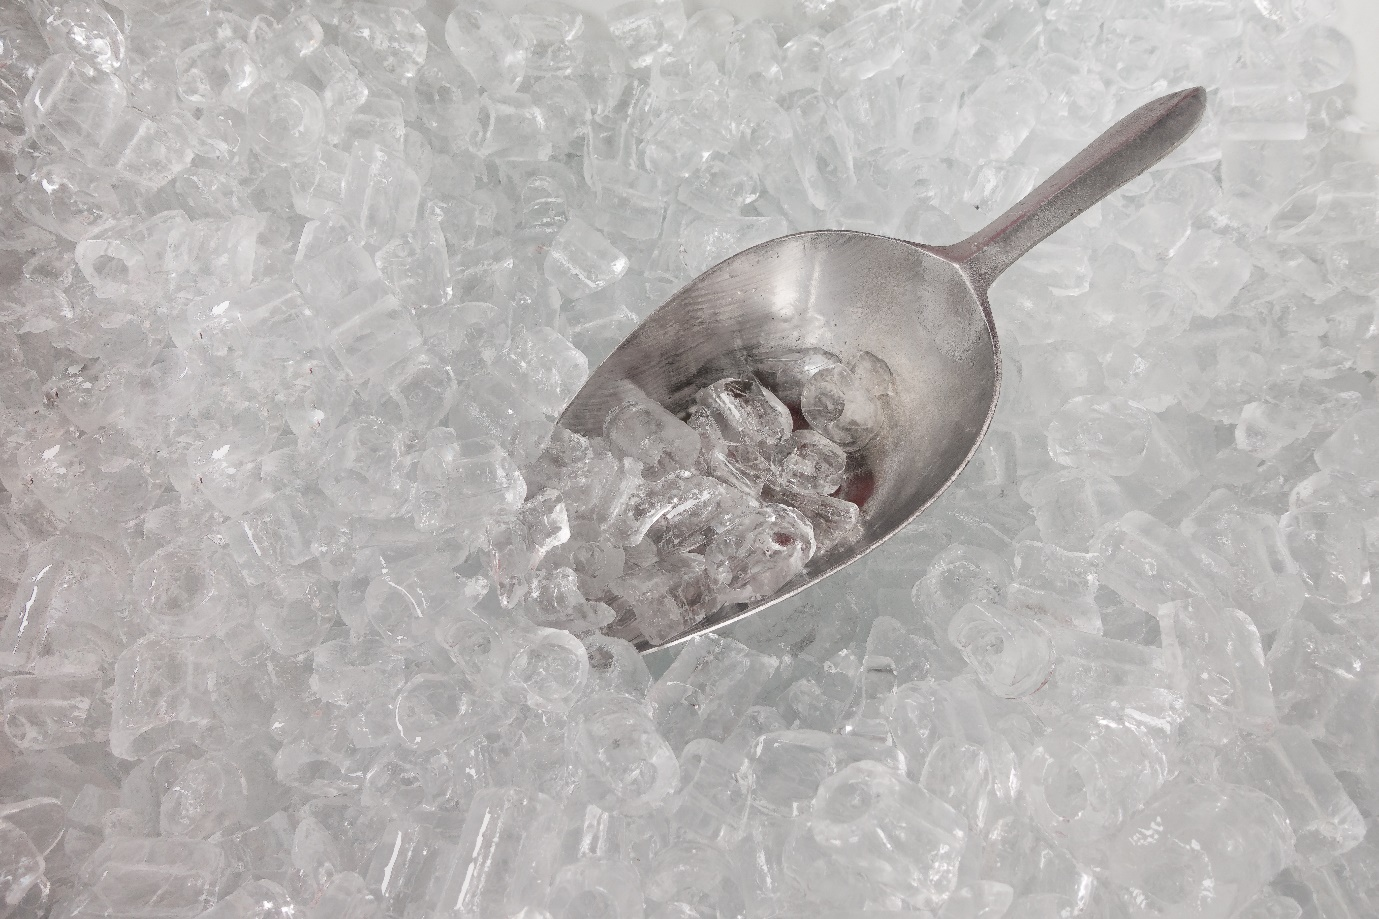 Scoop in ice